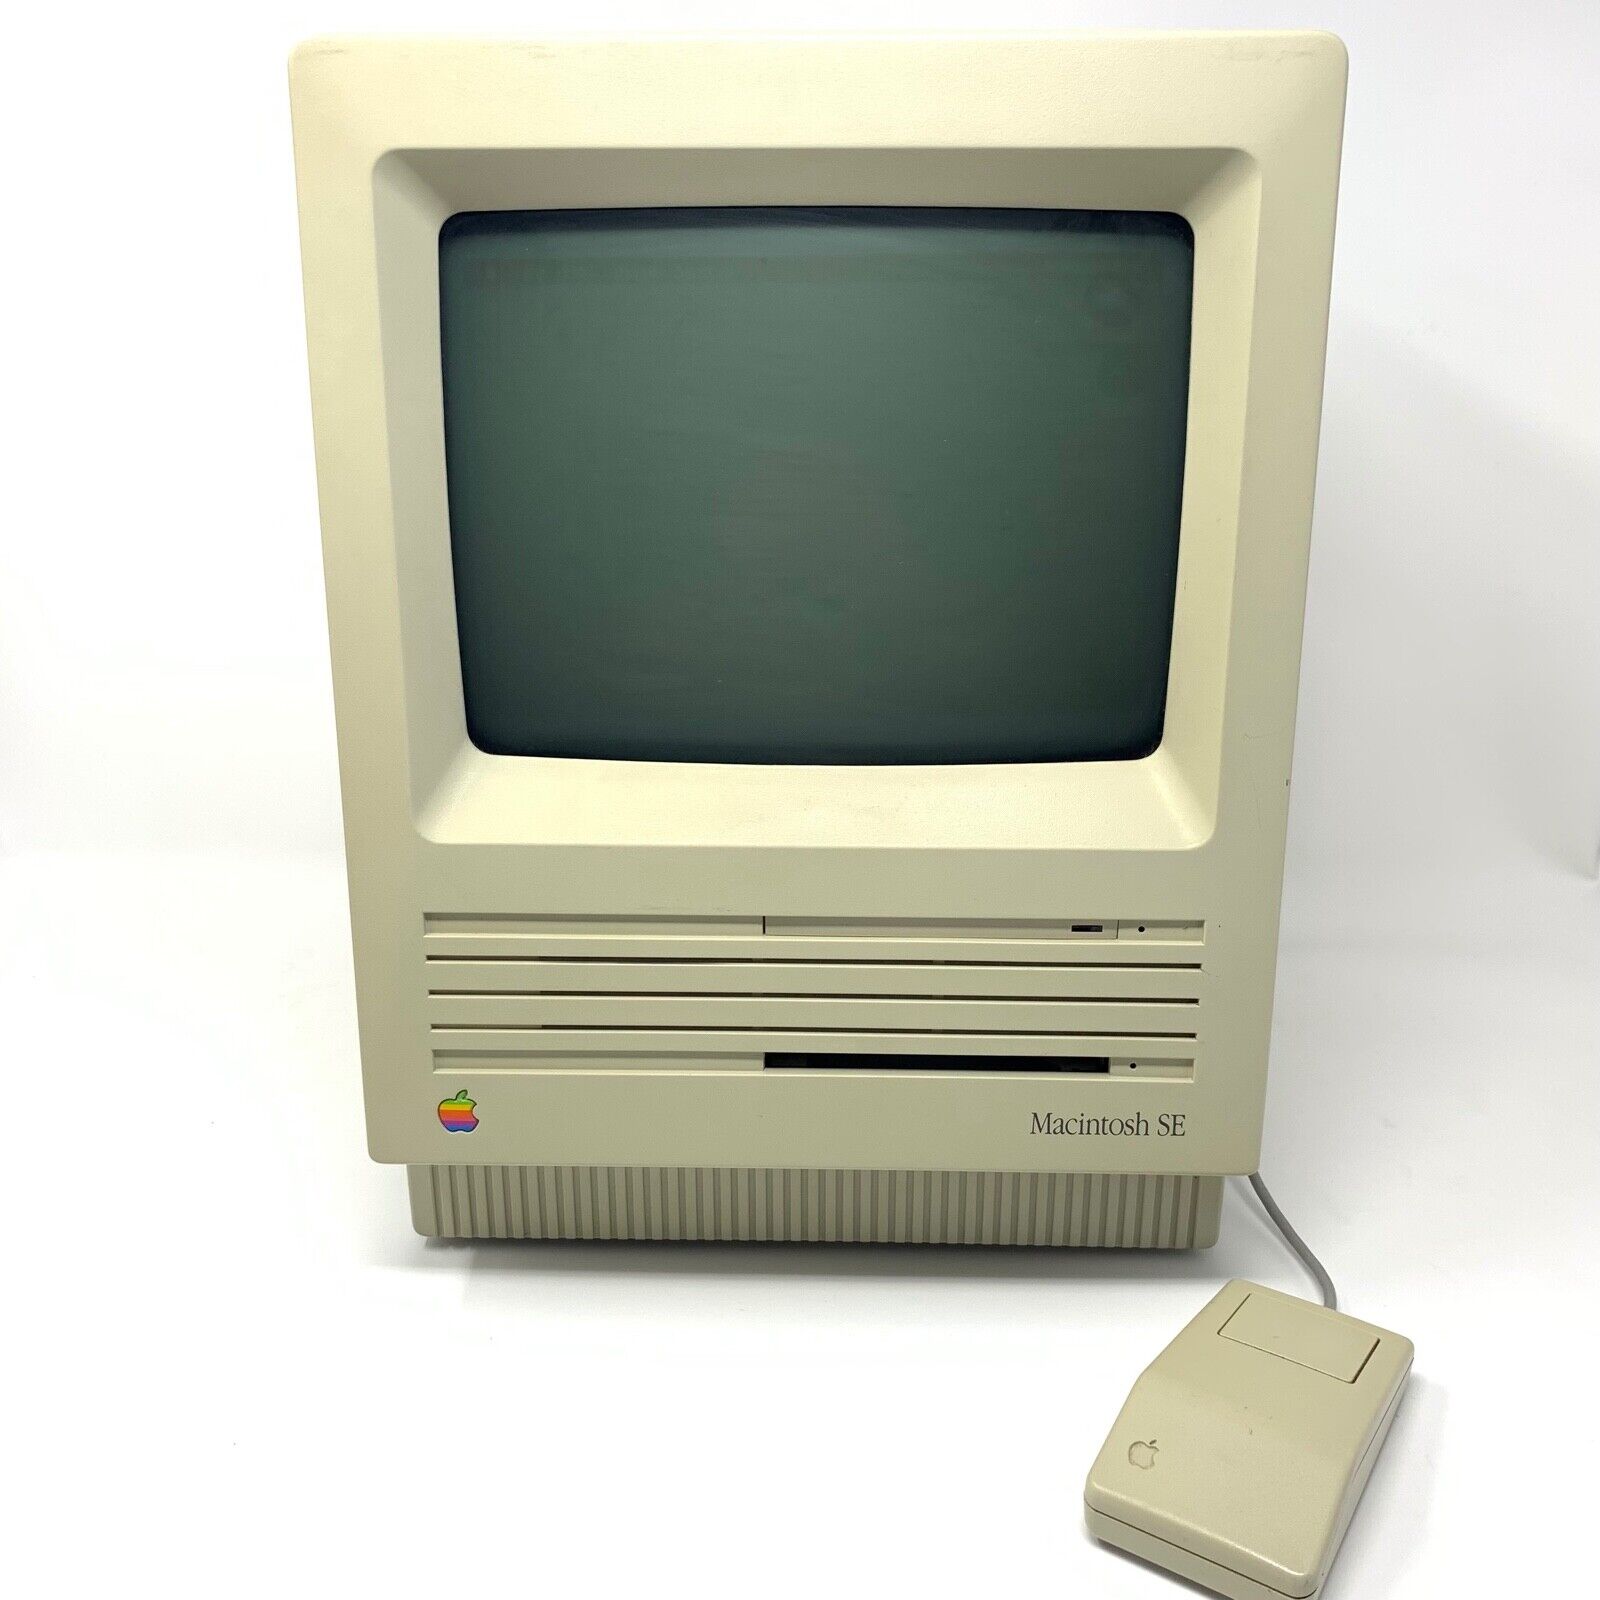 APPLE MACINTOSH SE VINTAGE COMPUTER 1988 M5011 w/ MOUSE TESTED WORKING - UNIQUE